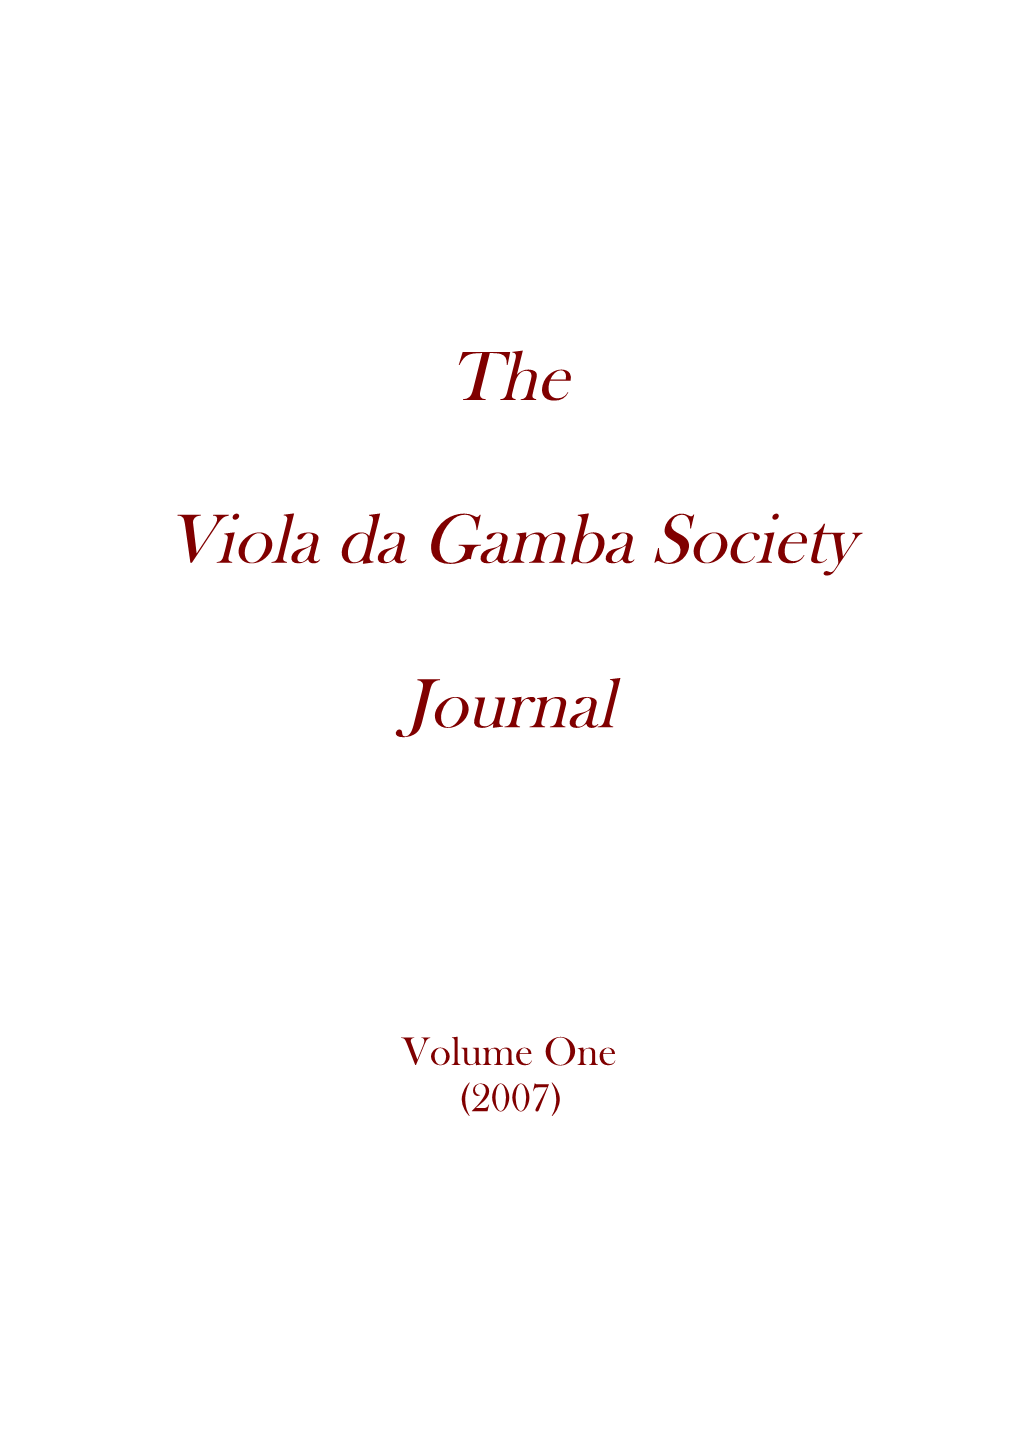 THE VIOLA DA GAMBA SOCIETY JOURNAL General Editor: Andrew Ashbee